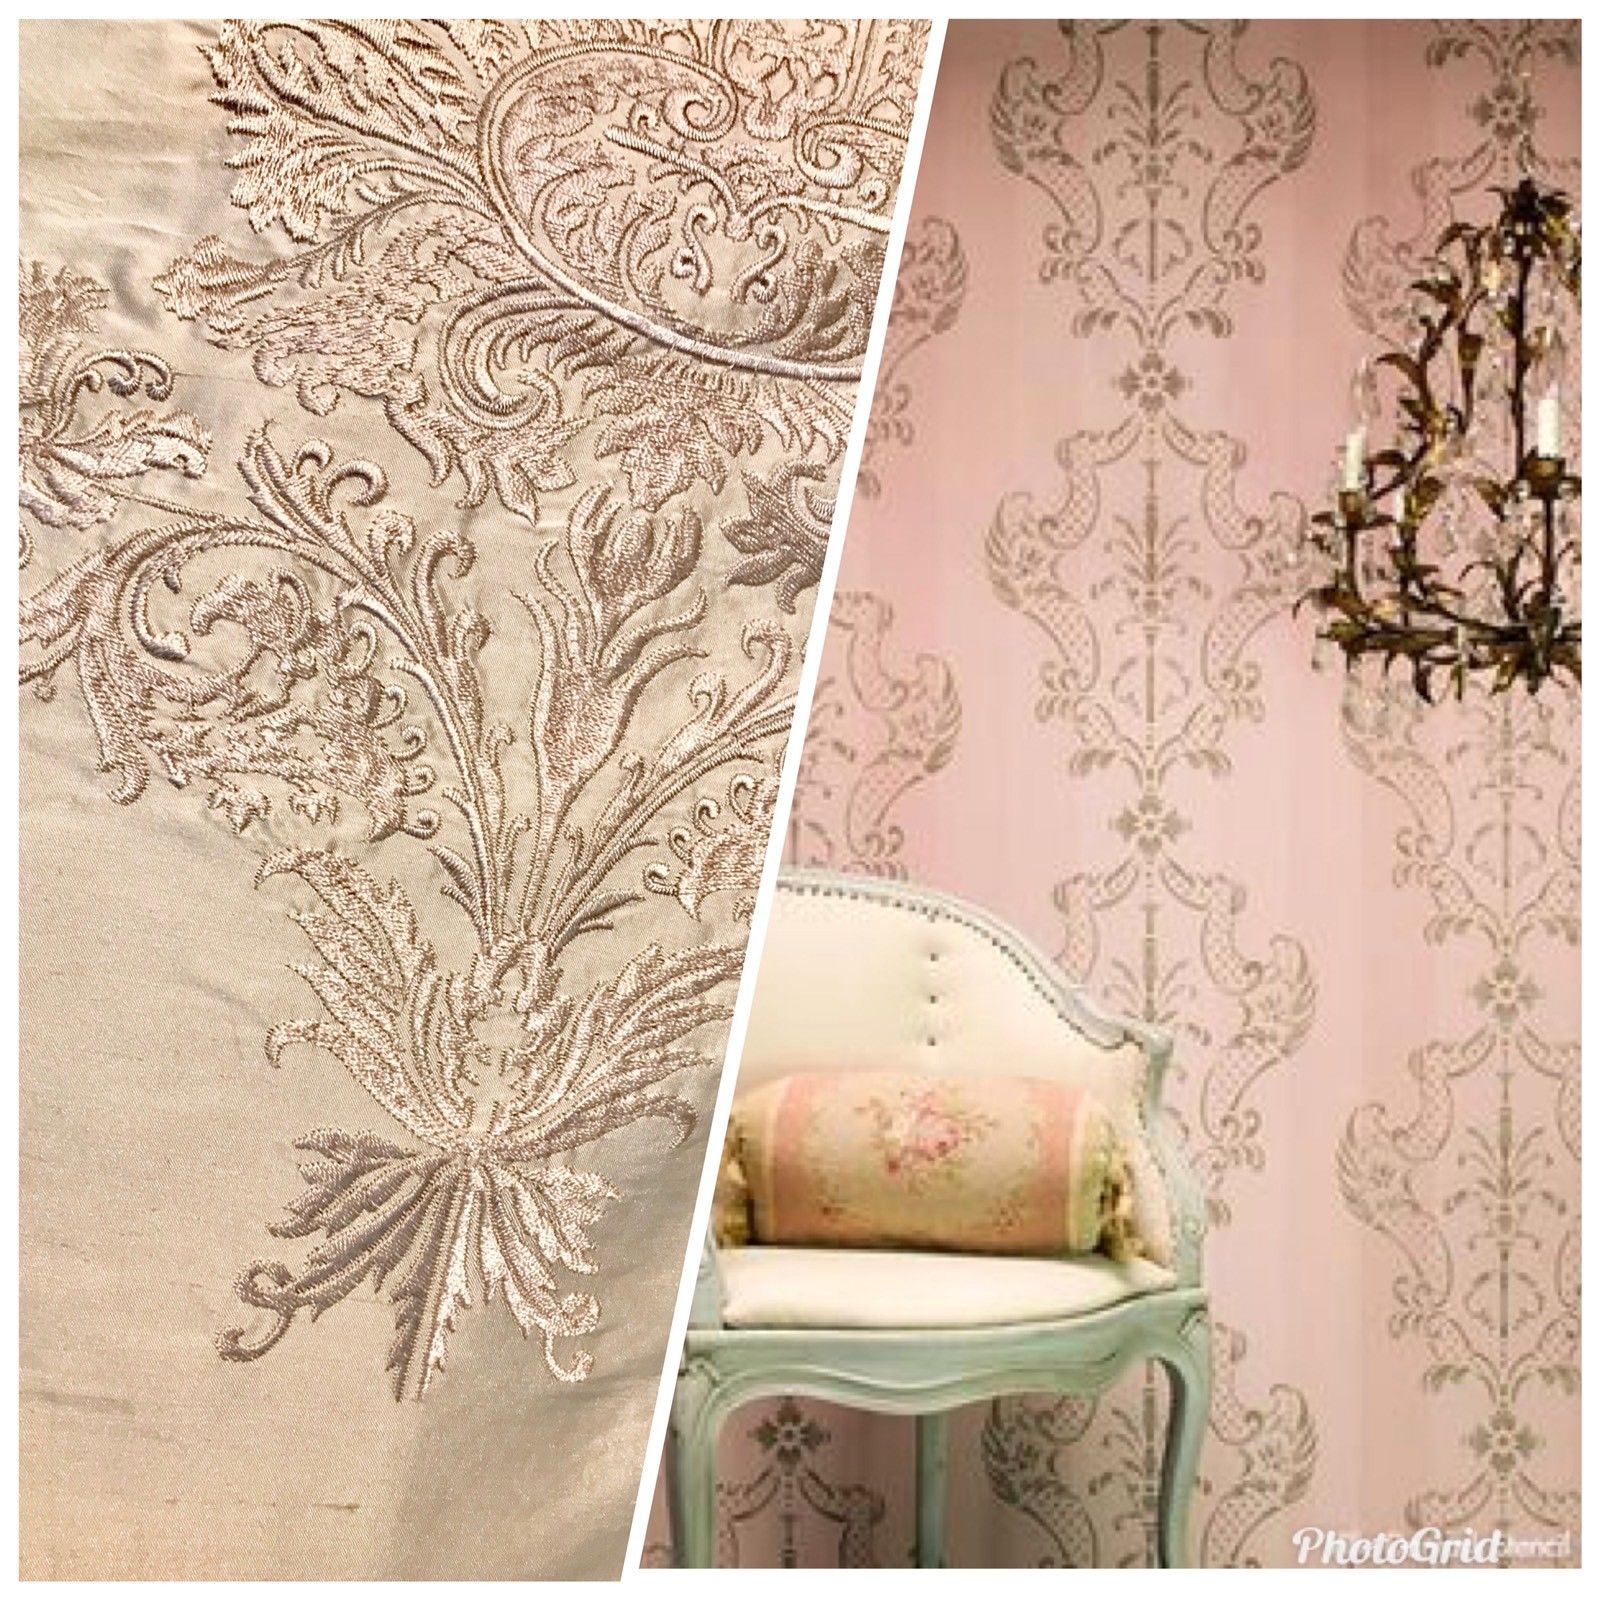 TS-7035: Carnation Pink Silk Taffeta Fabric 100% Silk